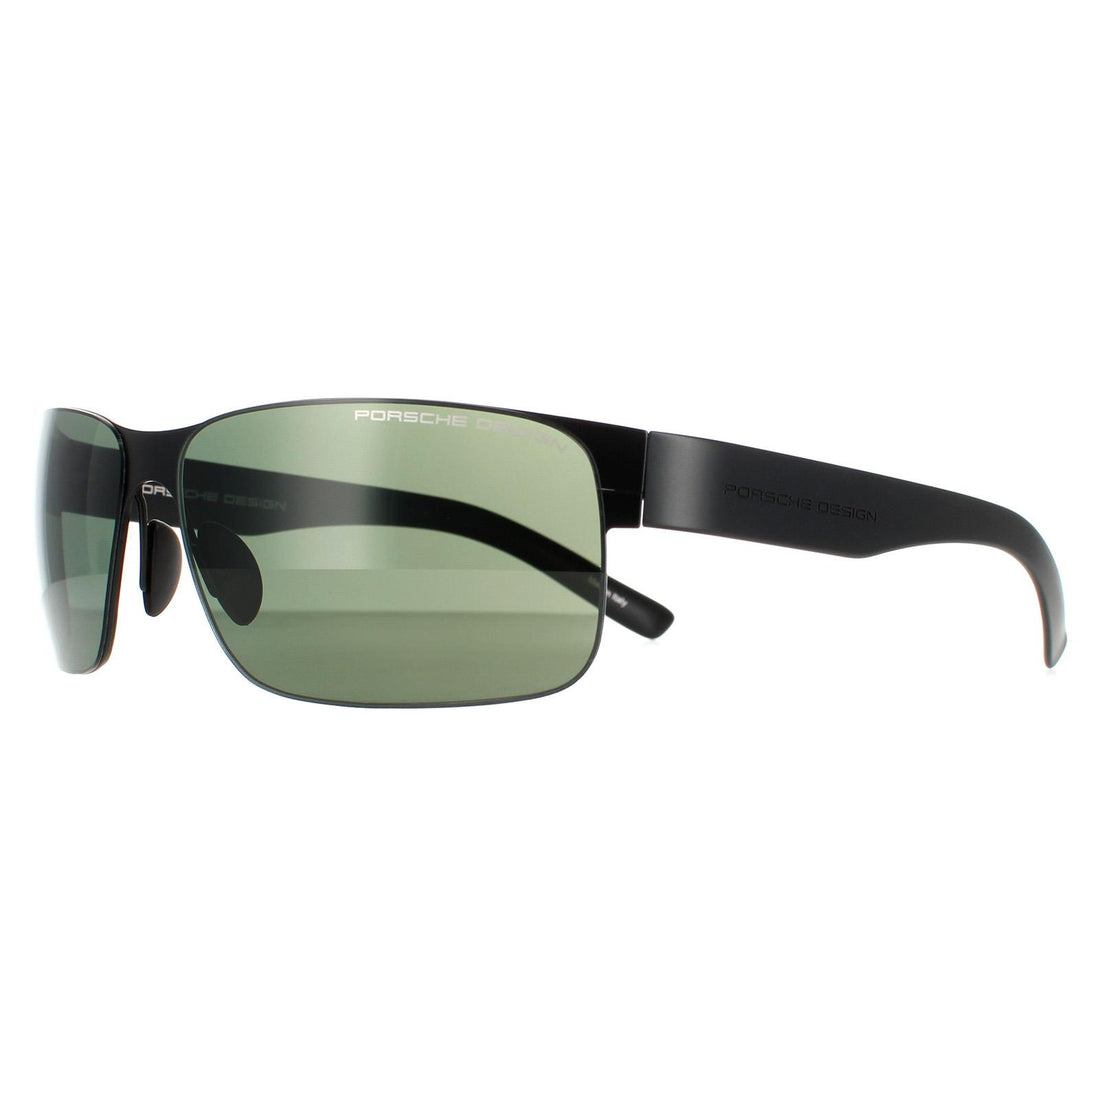 Porsche Design Sunglasses P8573 B Black Green